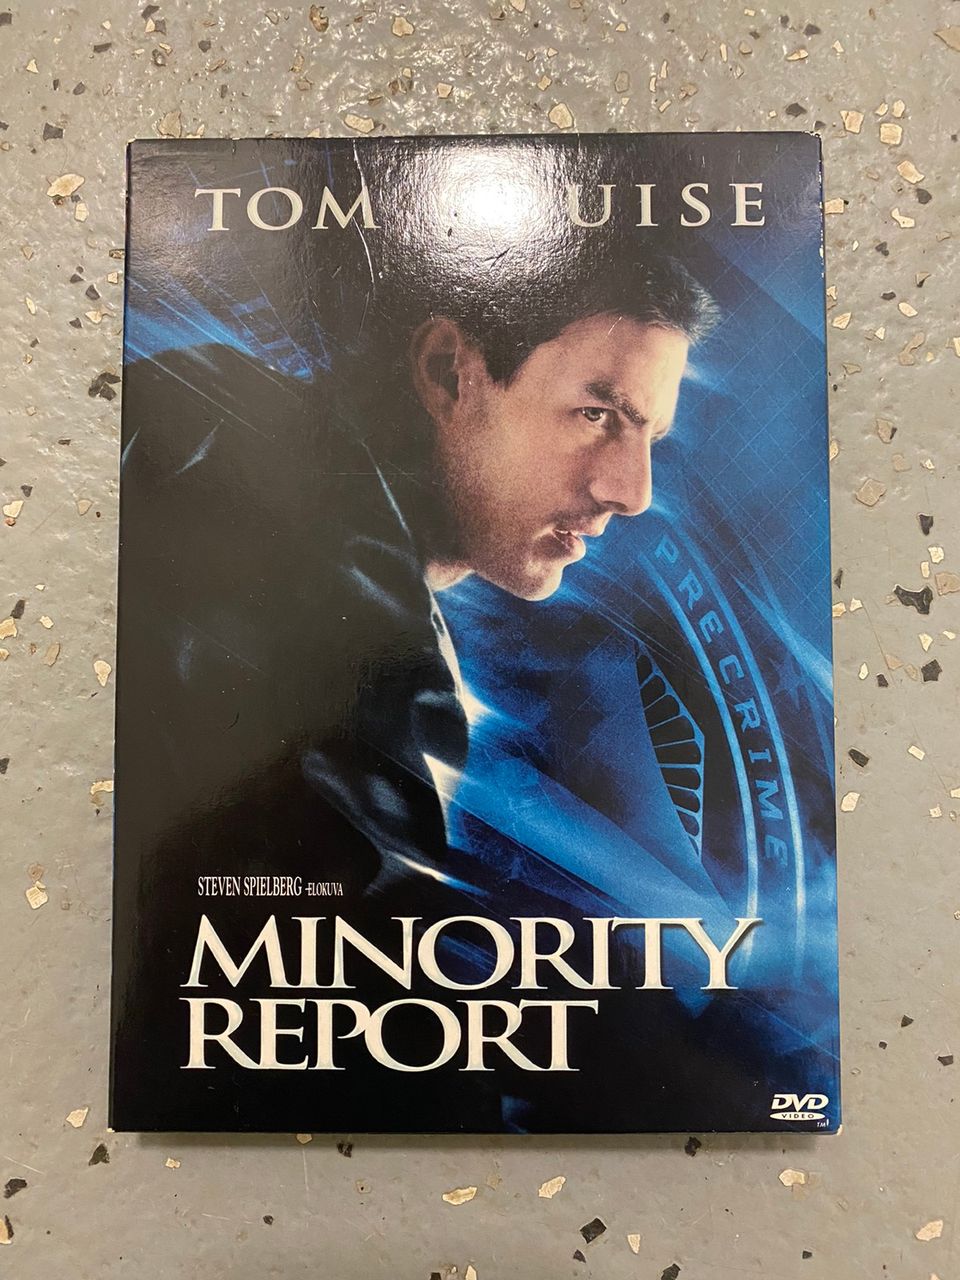 Minority report dvd